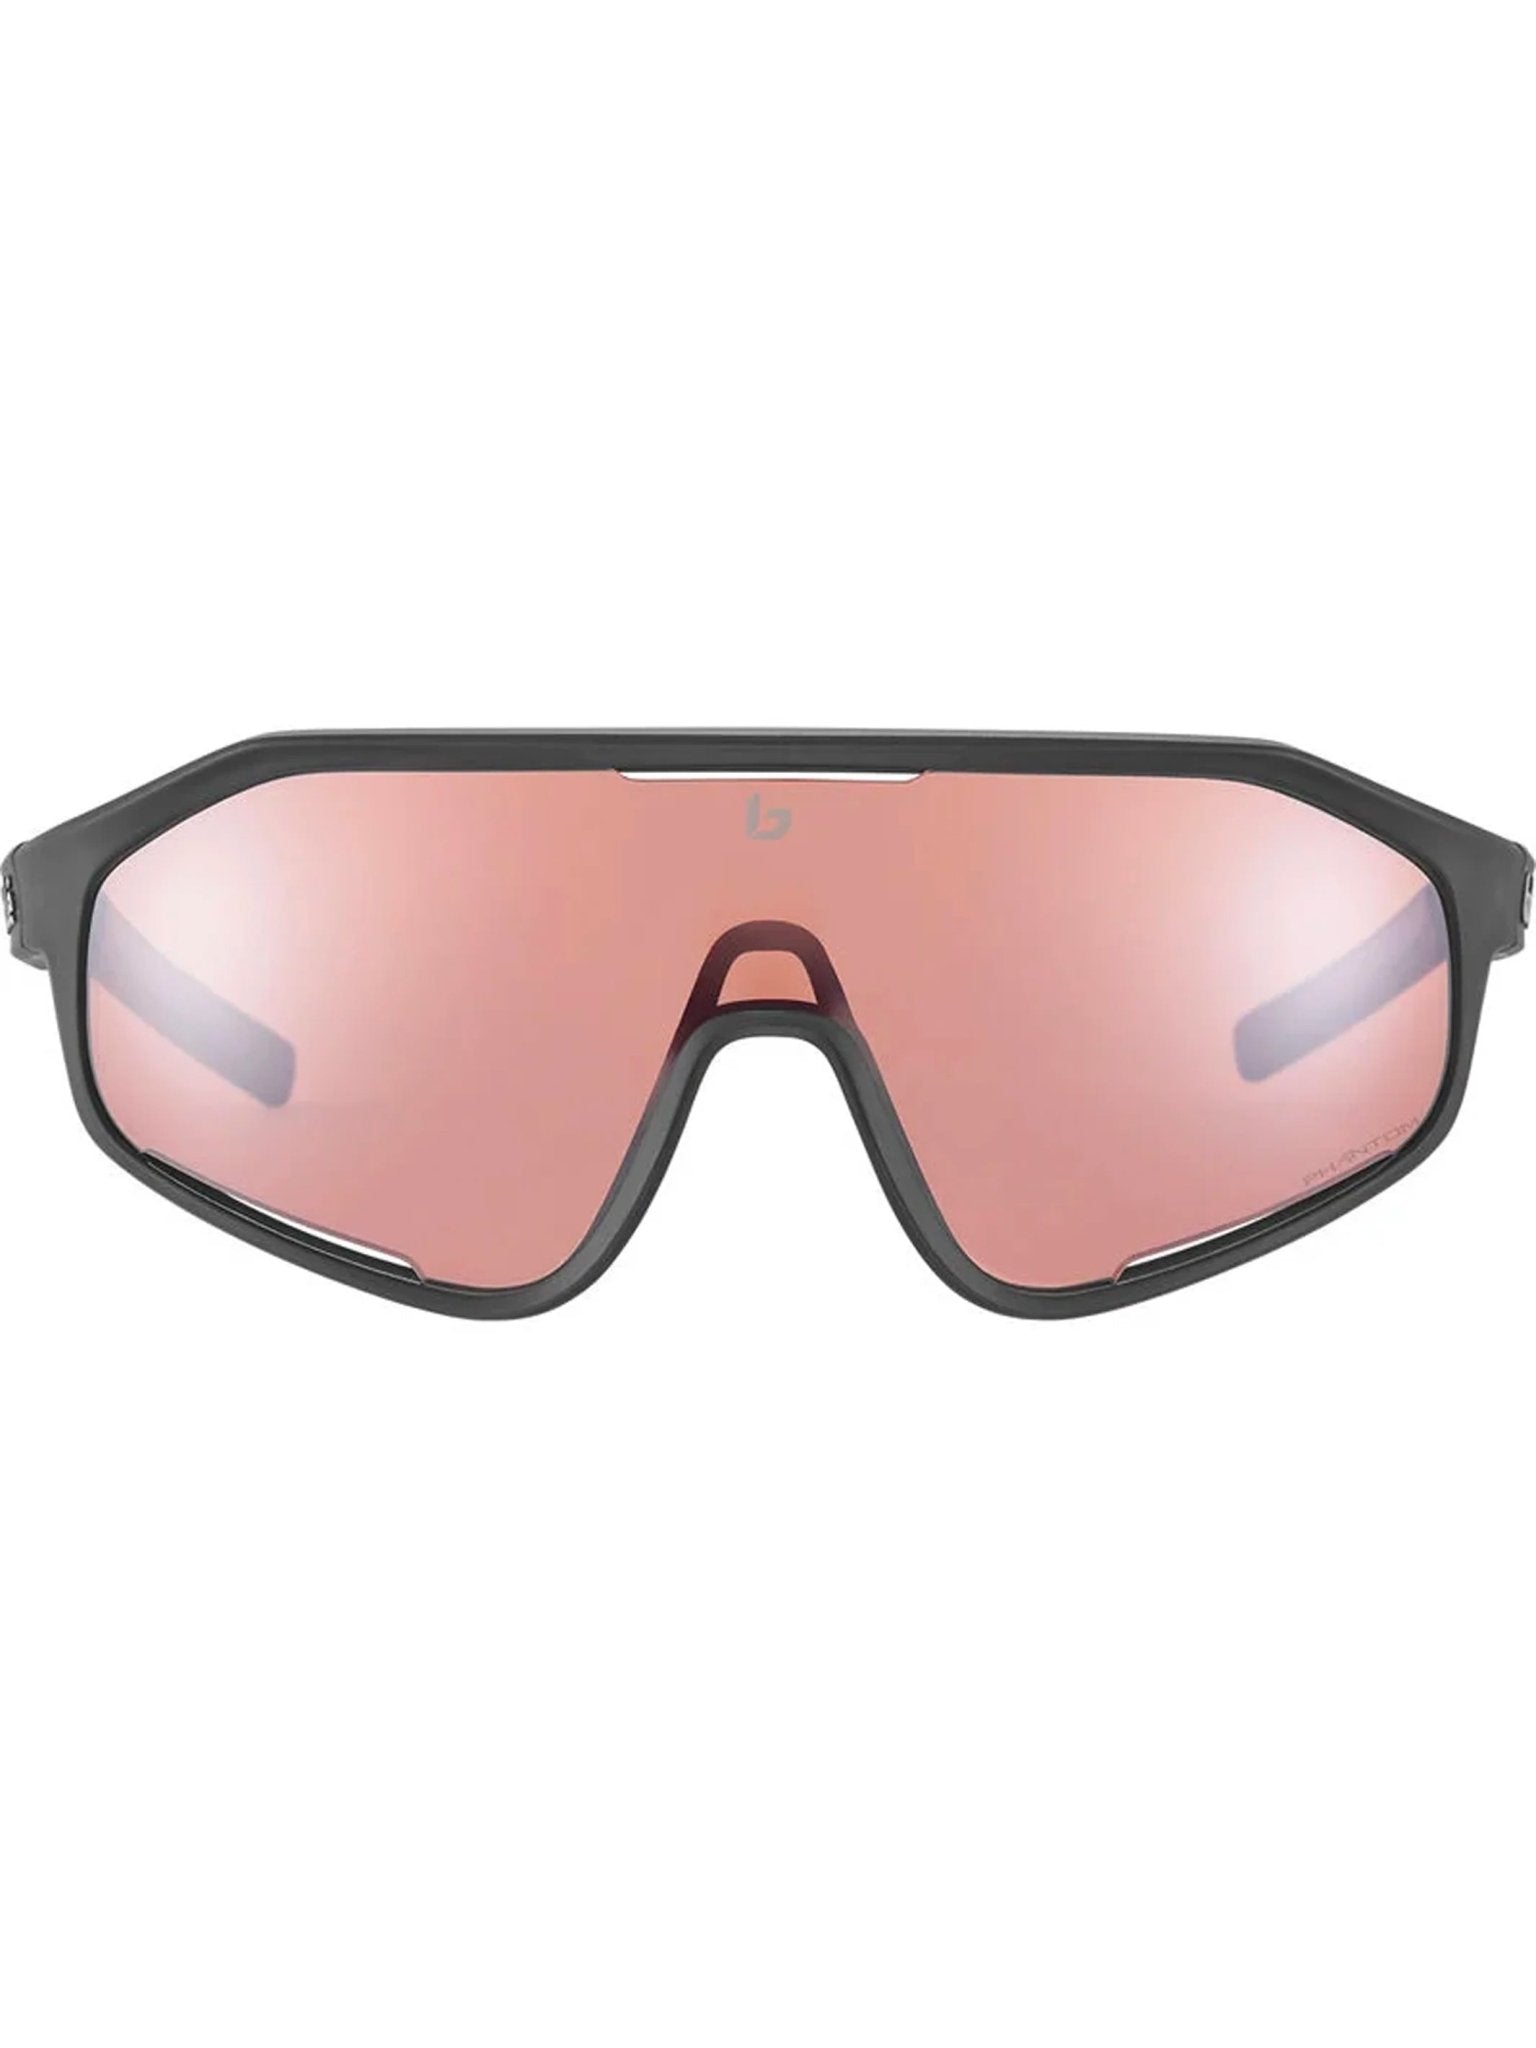 4elementsclothingBolléBolle - SHIFTER Sunglasses Black Matte - Phantom Brown Red 1 PhotochromicsunglassesBS010007